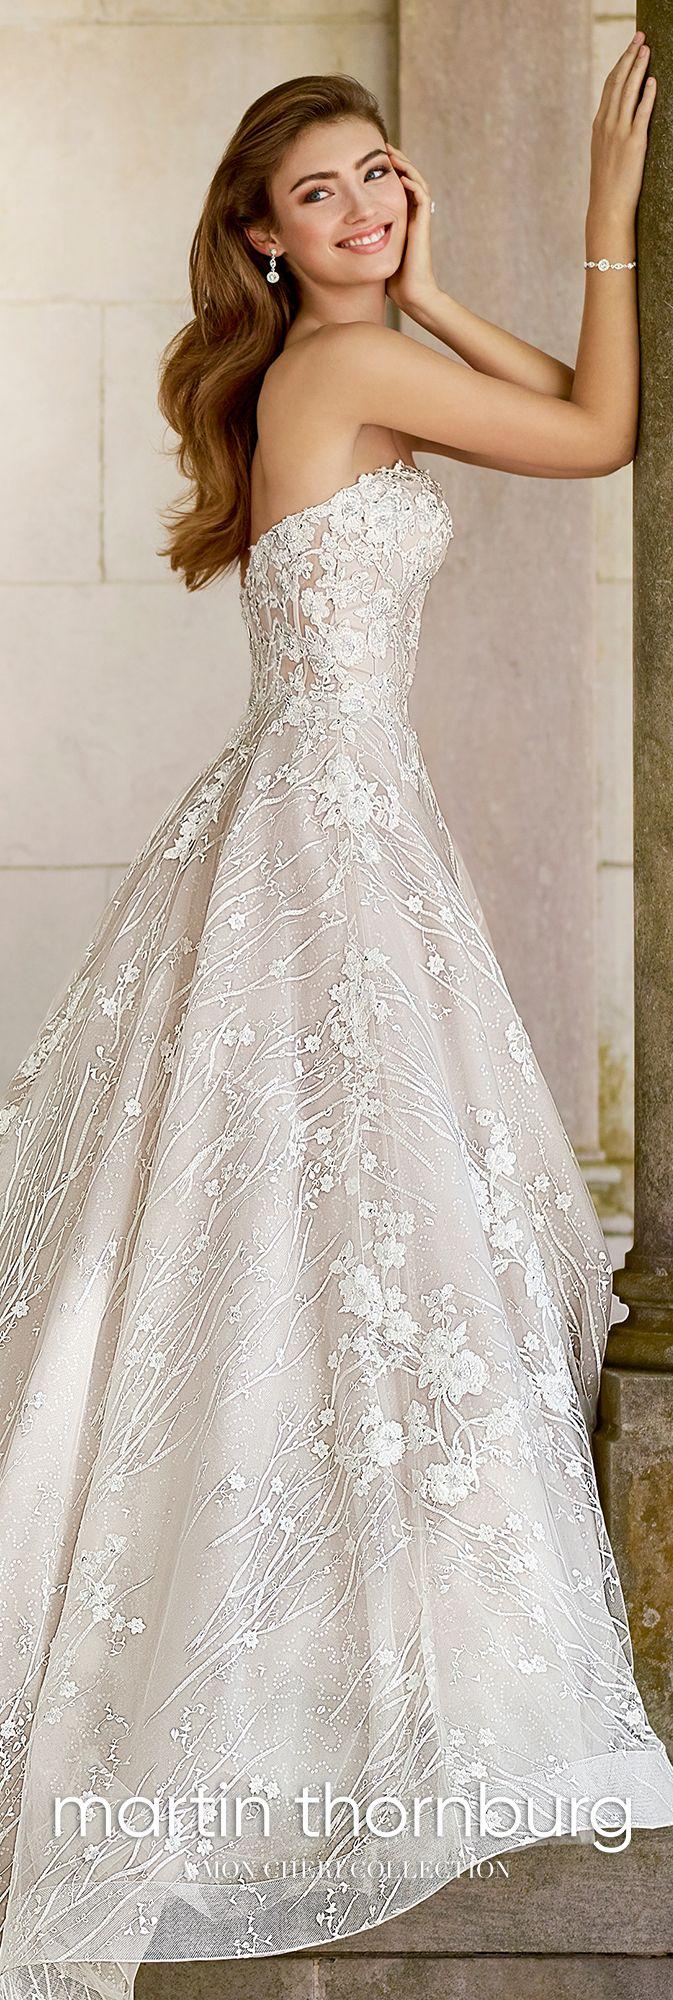 زفاف - Strapless Sweetheart Lace Wedding Gown - 118281 Coda